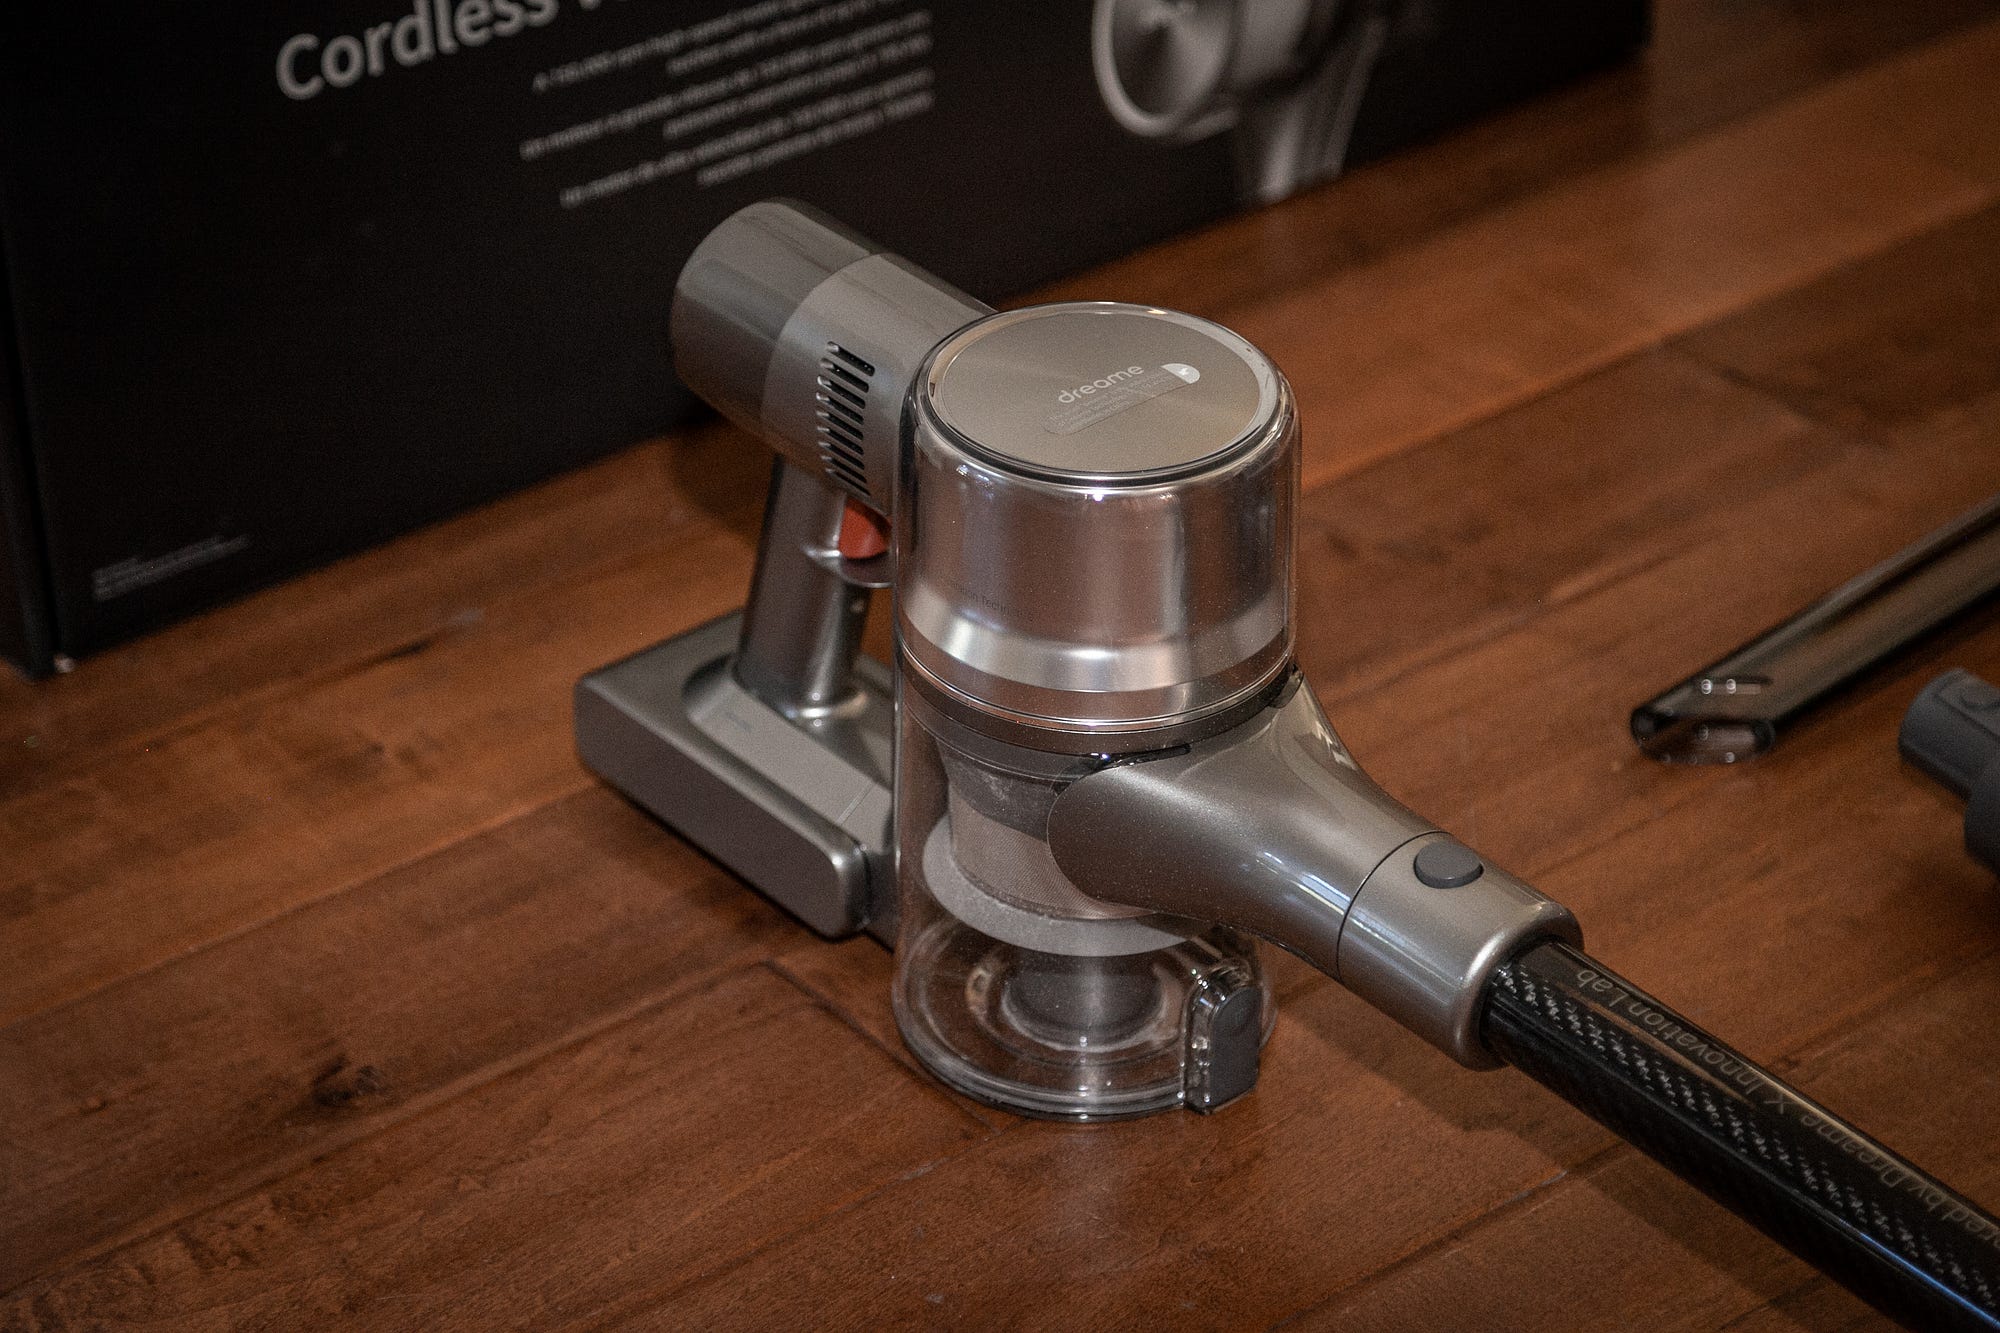 Review: Dreame Technology's T30 Cordless Stick Vacuum, by Brady Betzel